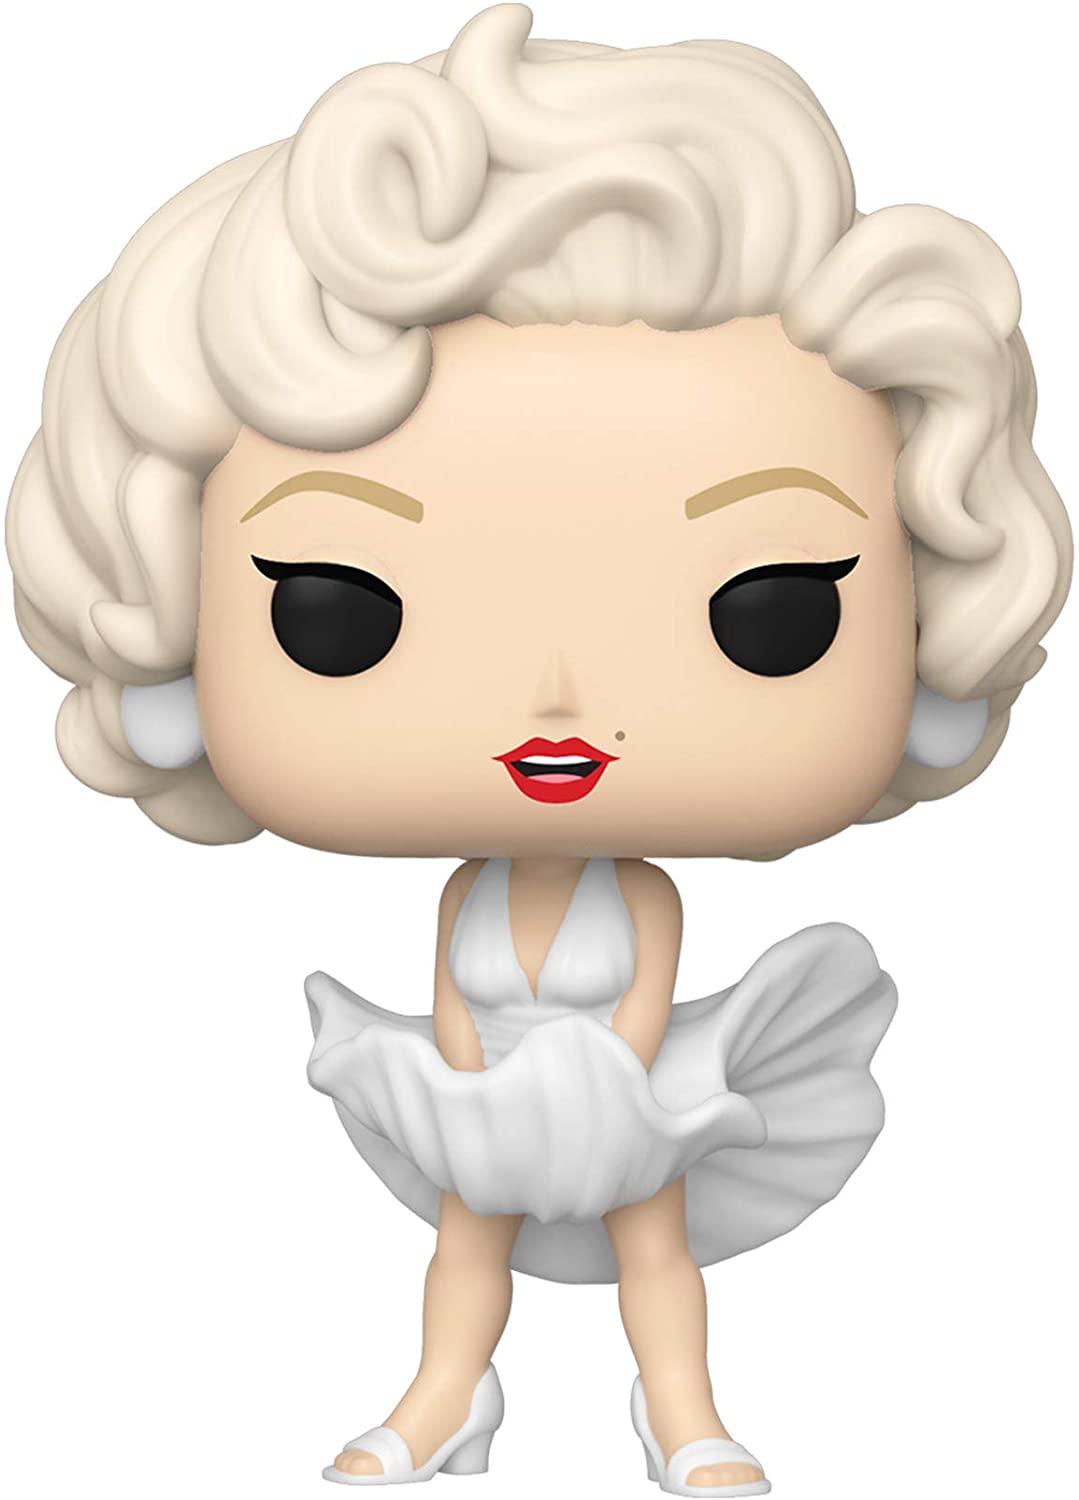 Funko Pop! Icons Marilyn Monroe White Dress Vinyl Figure